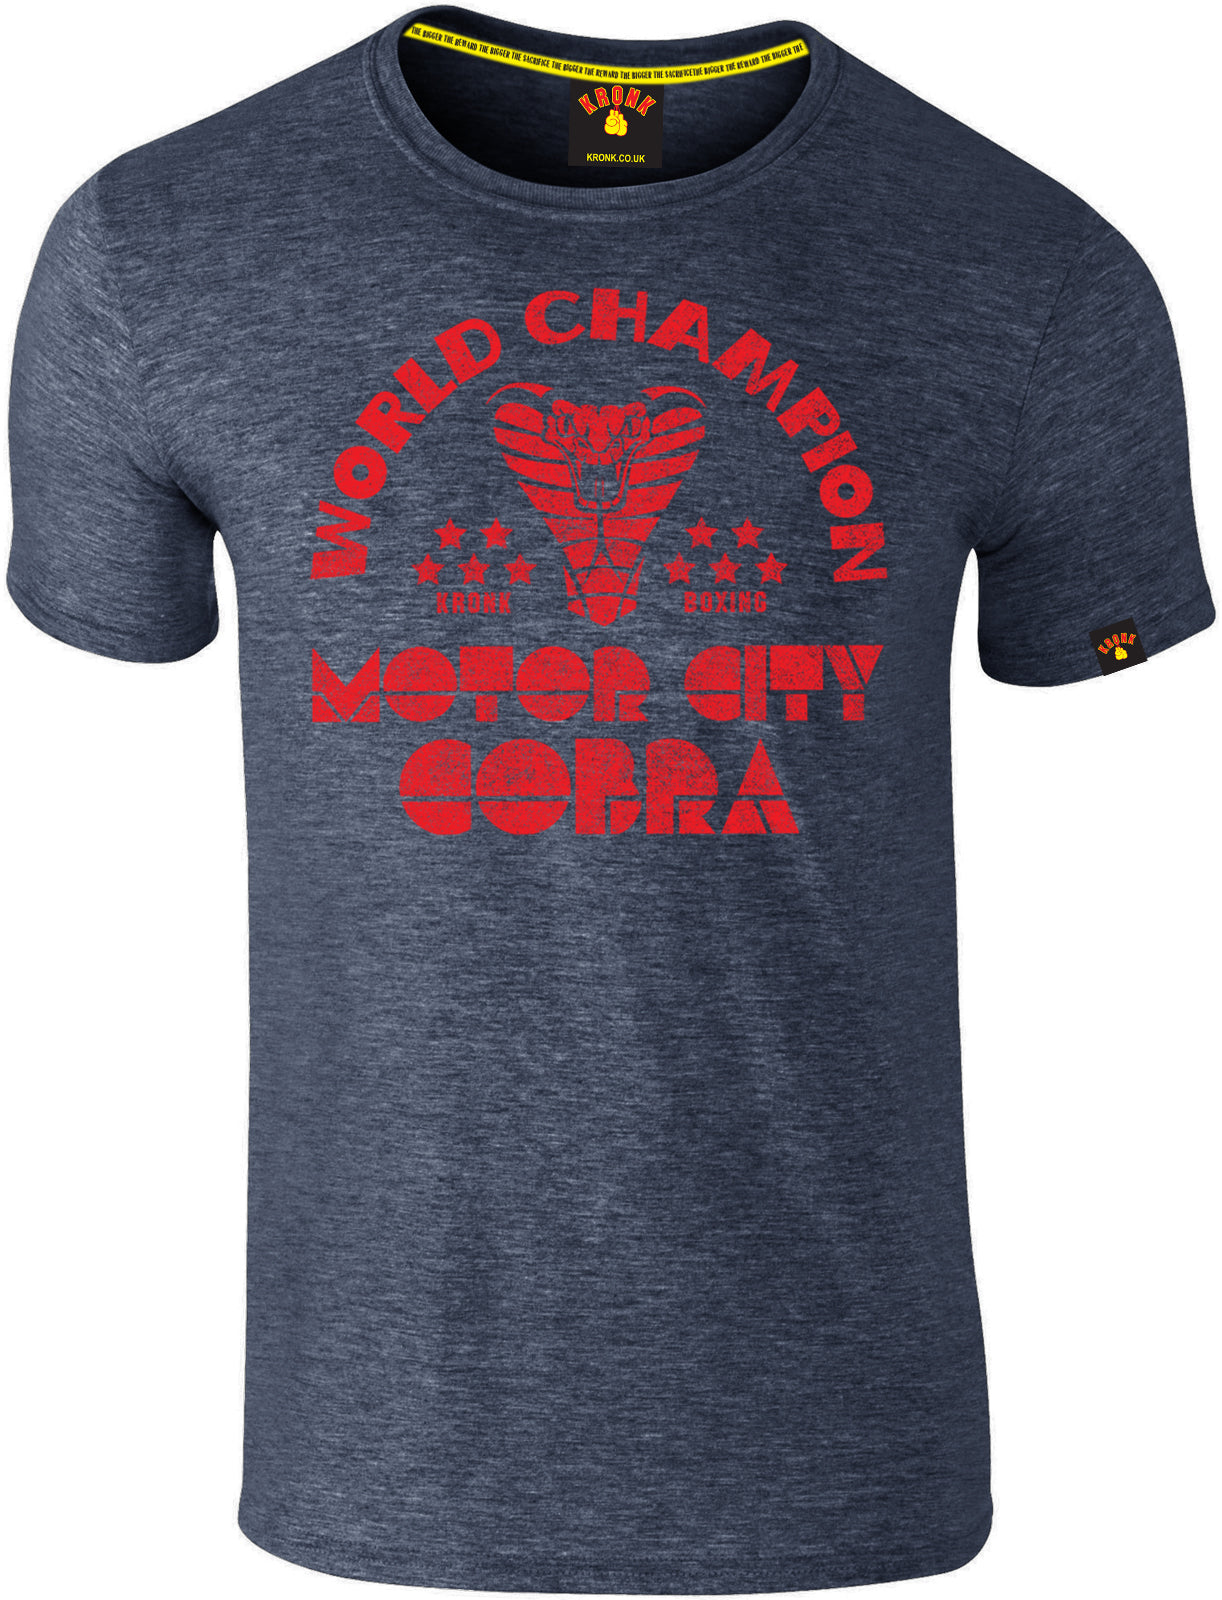 KRONK Thomas Hearns Motor City Cobra Slimfit T Shirt Navy Melange